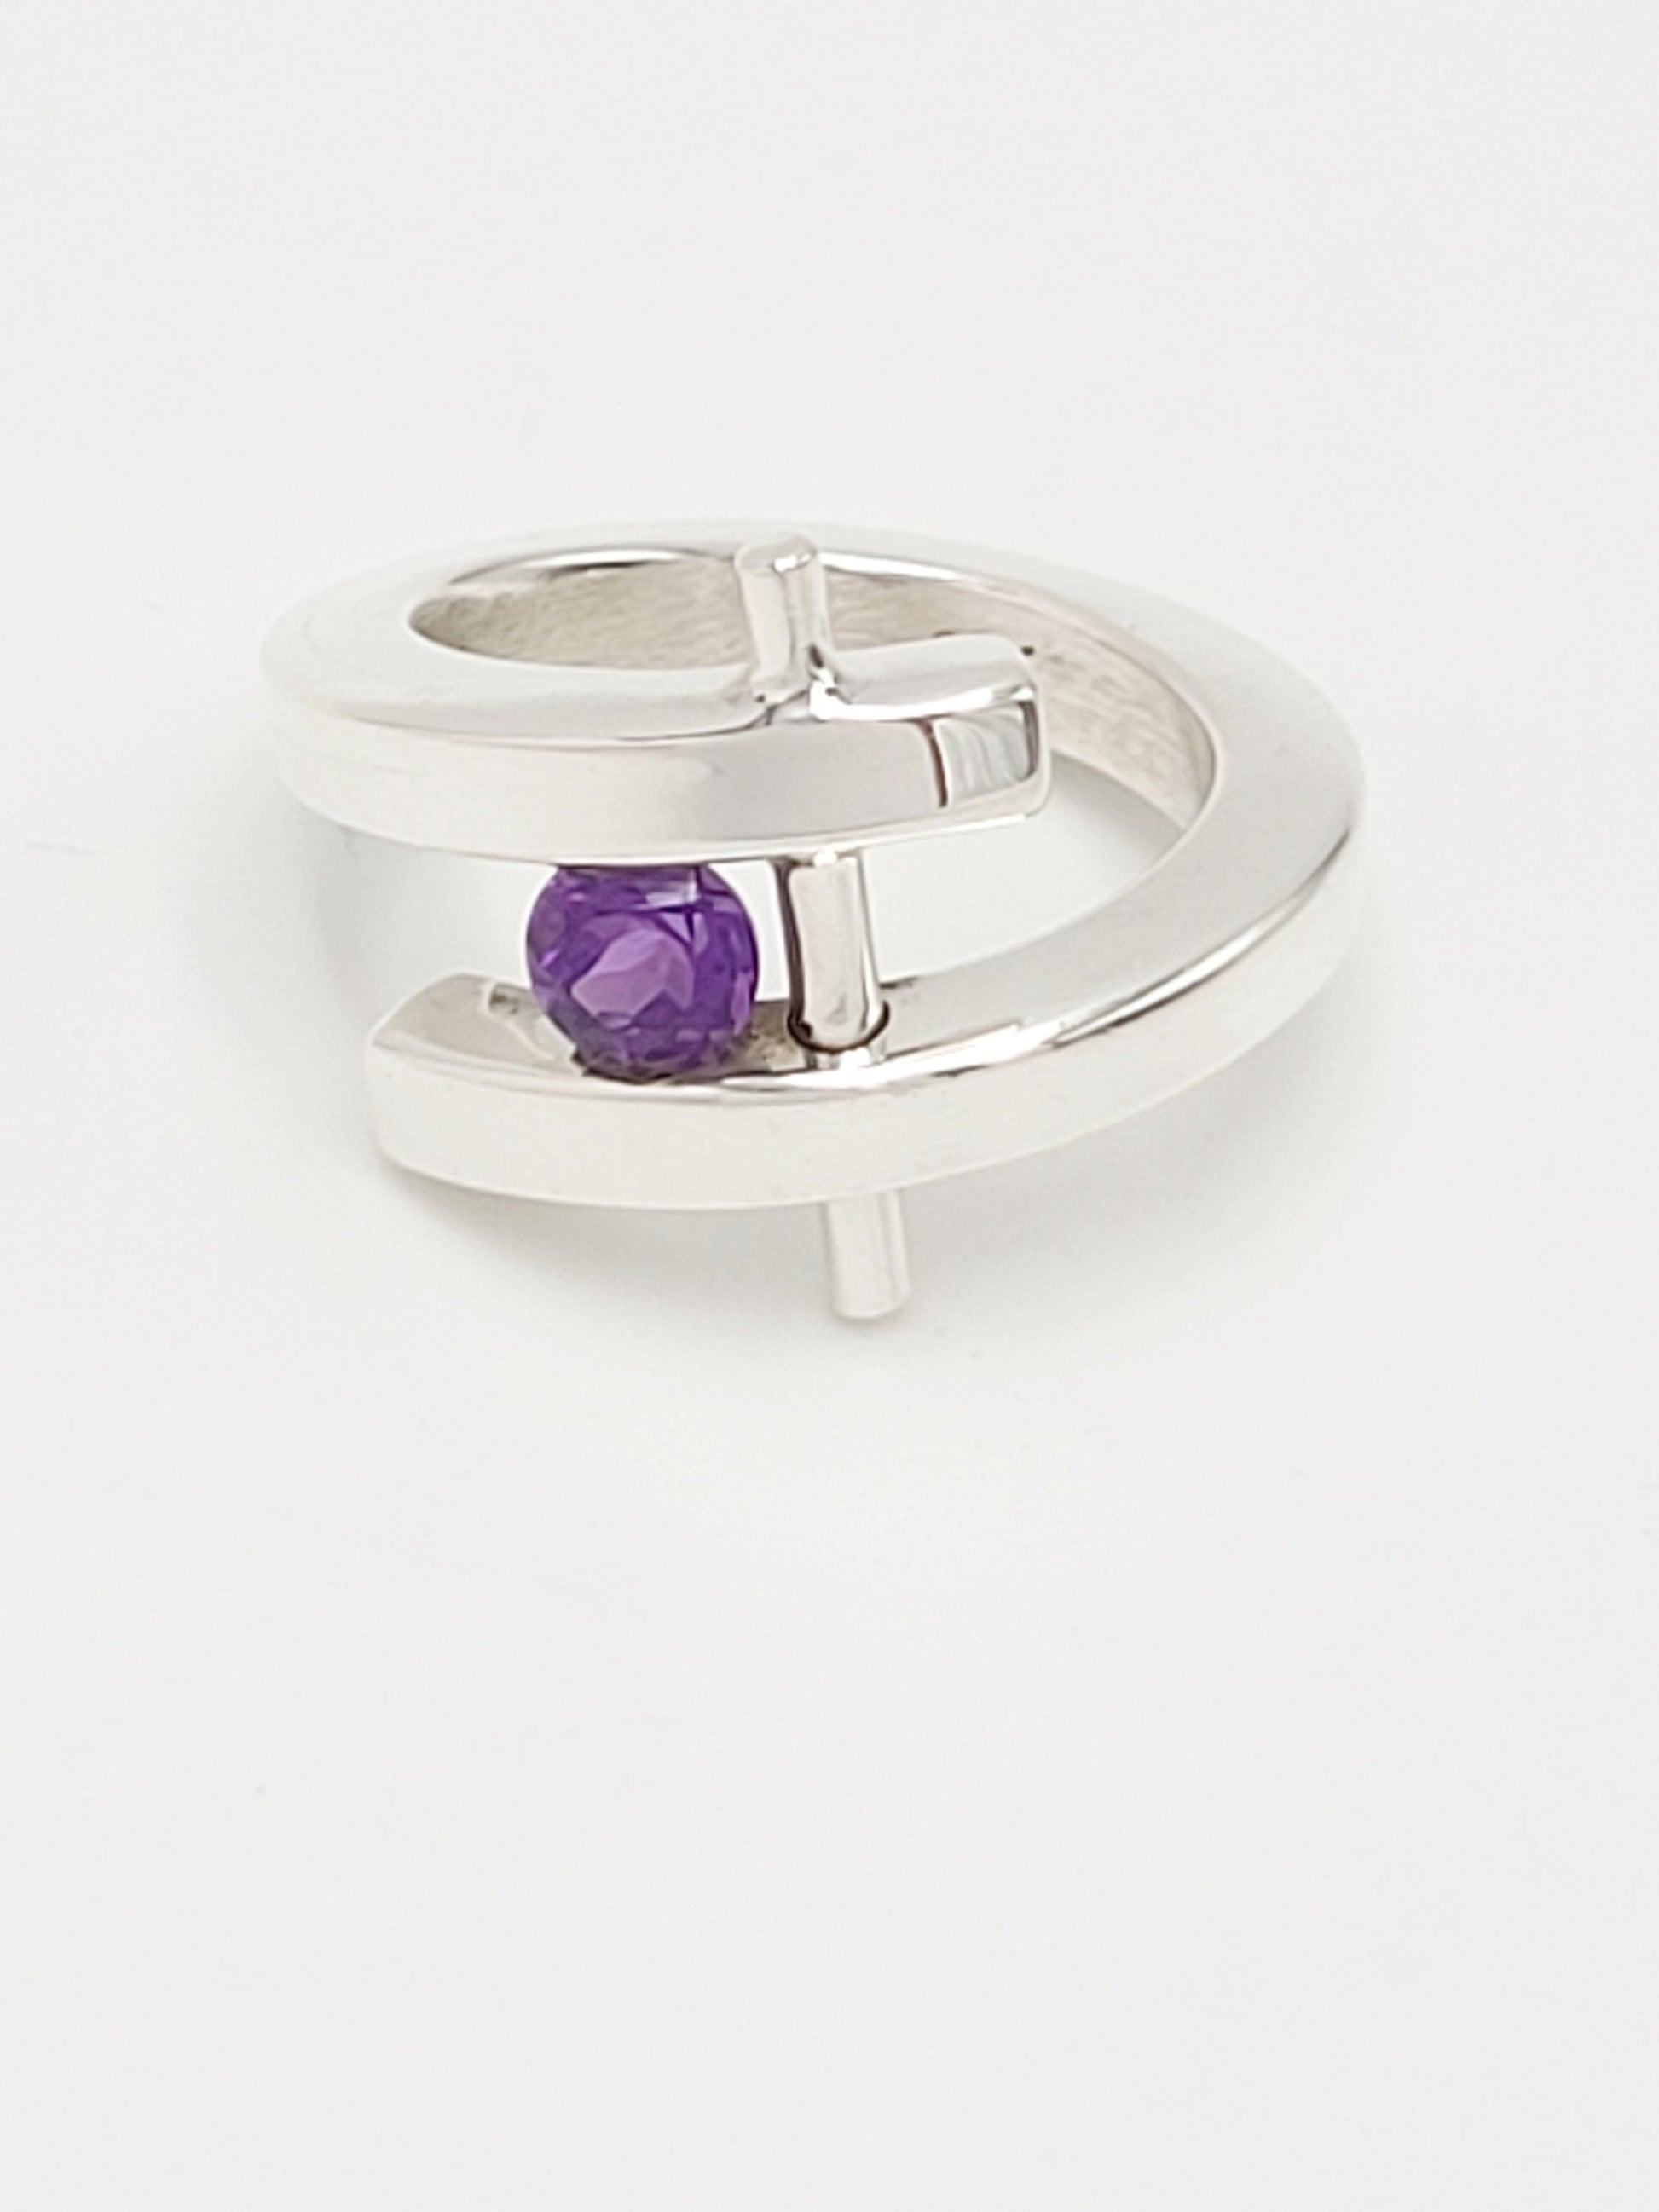 Modernist Sterling Amethyst Ring Jewelry Superb Estate Designer Sterling Silver & Amethyst Abstract Modernist Ring